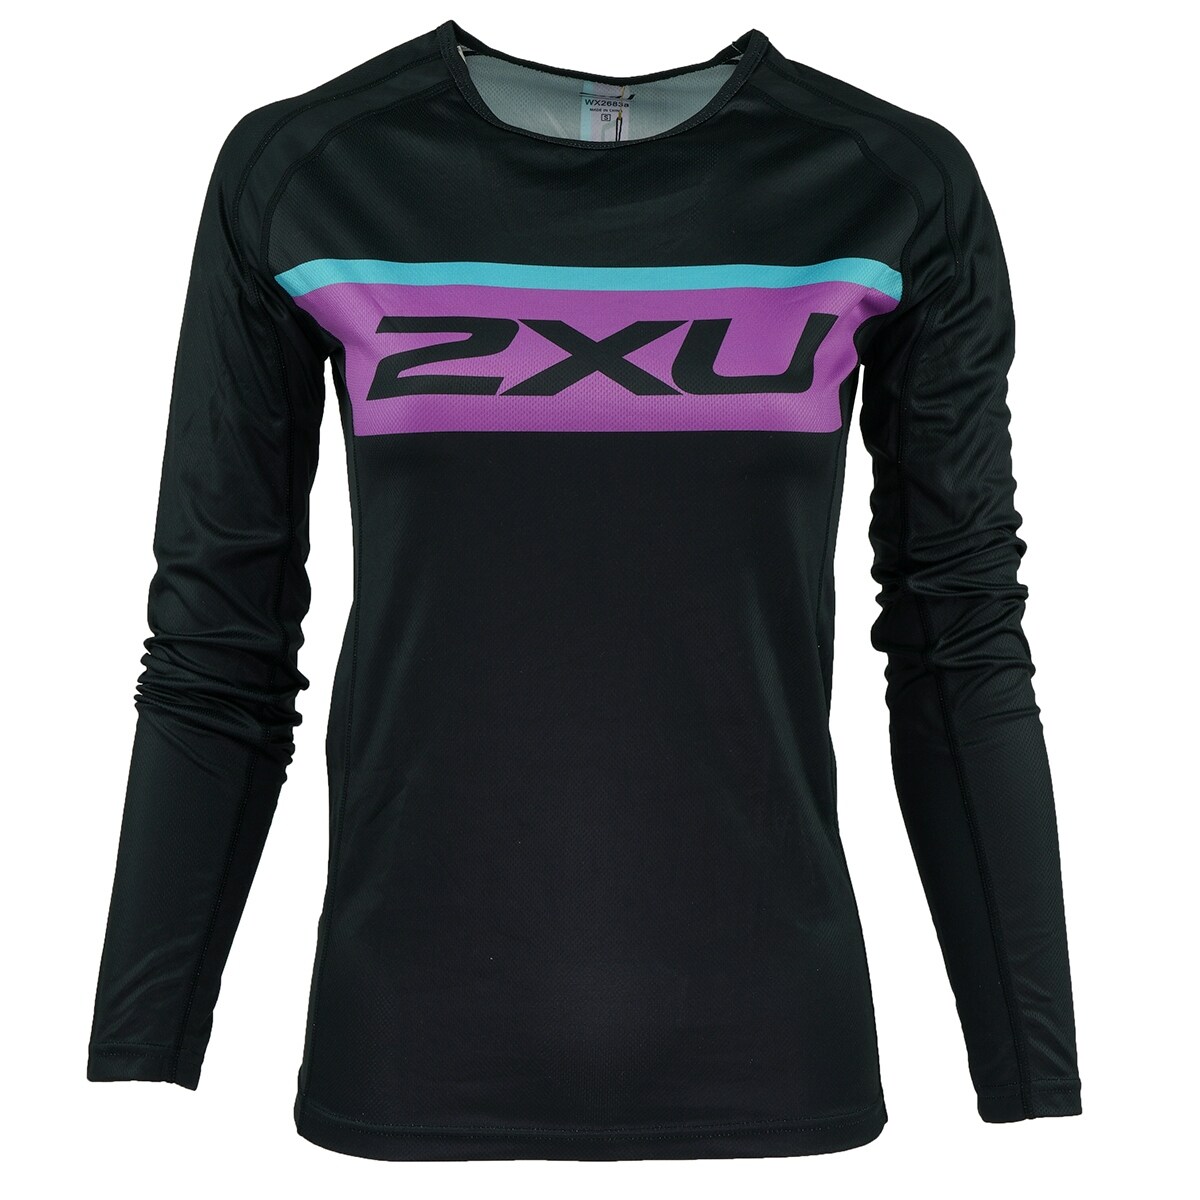 2XU Women's L/S Shirt Black/Purple - Overstock 25692910